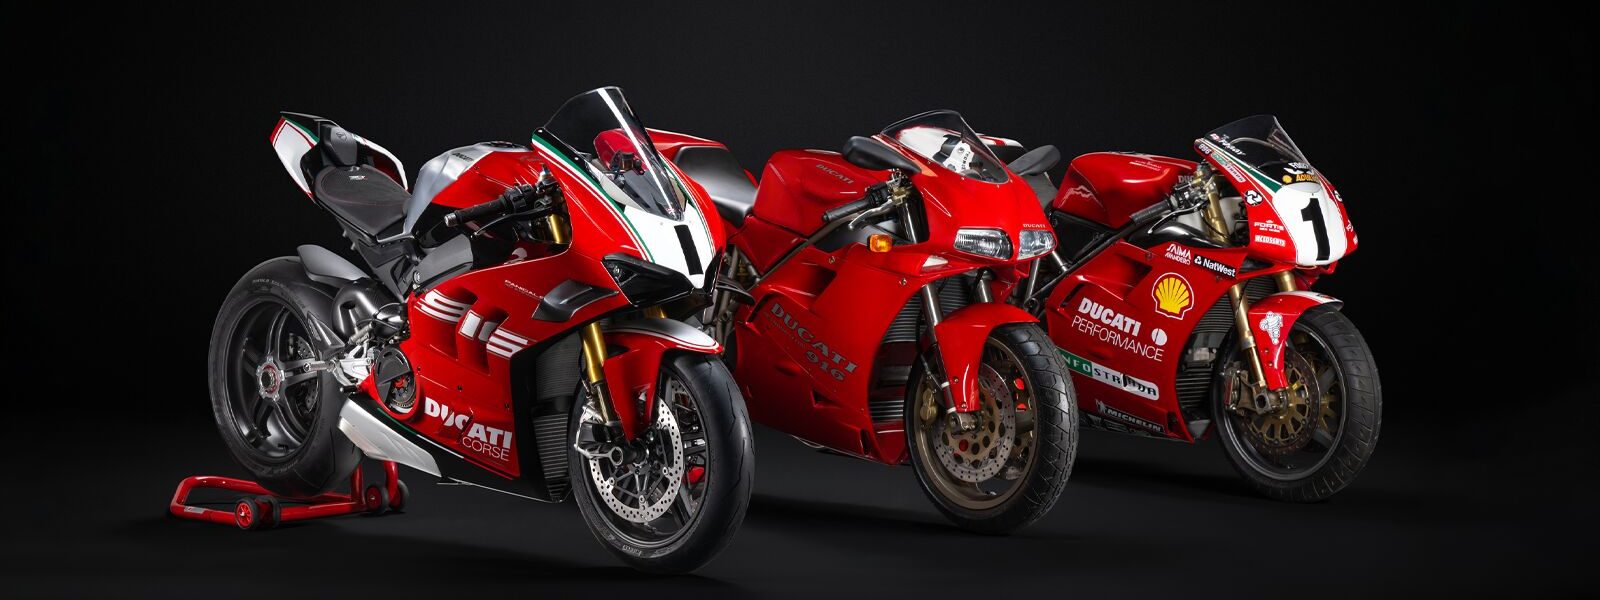 Ducati-Panigale-V4-SP2-30-anniversario-916-DWP24-Overview-hero-short-1600x1000-03 (convert.io)